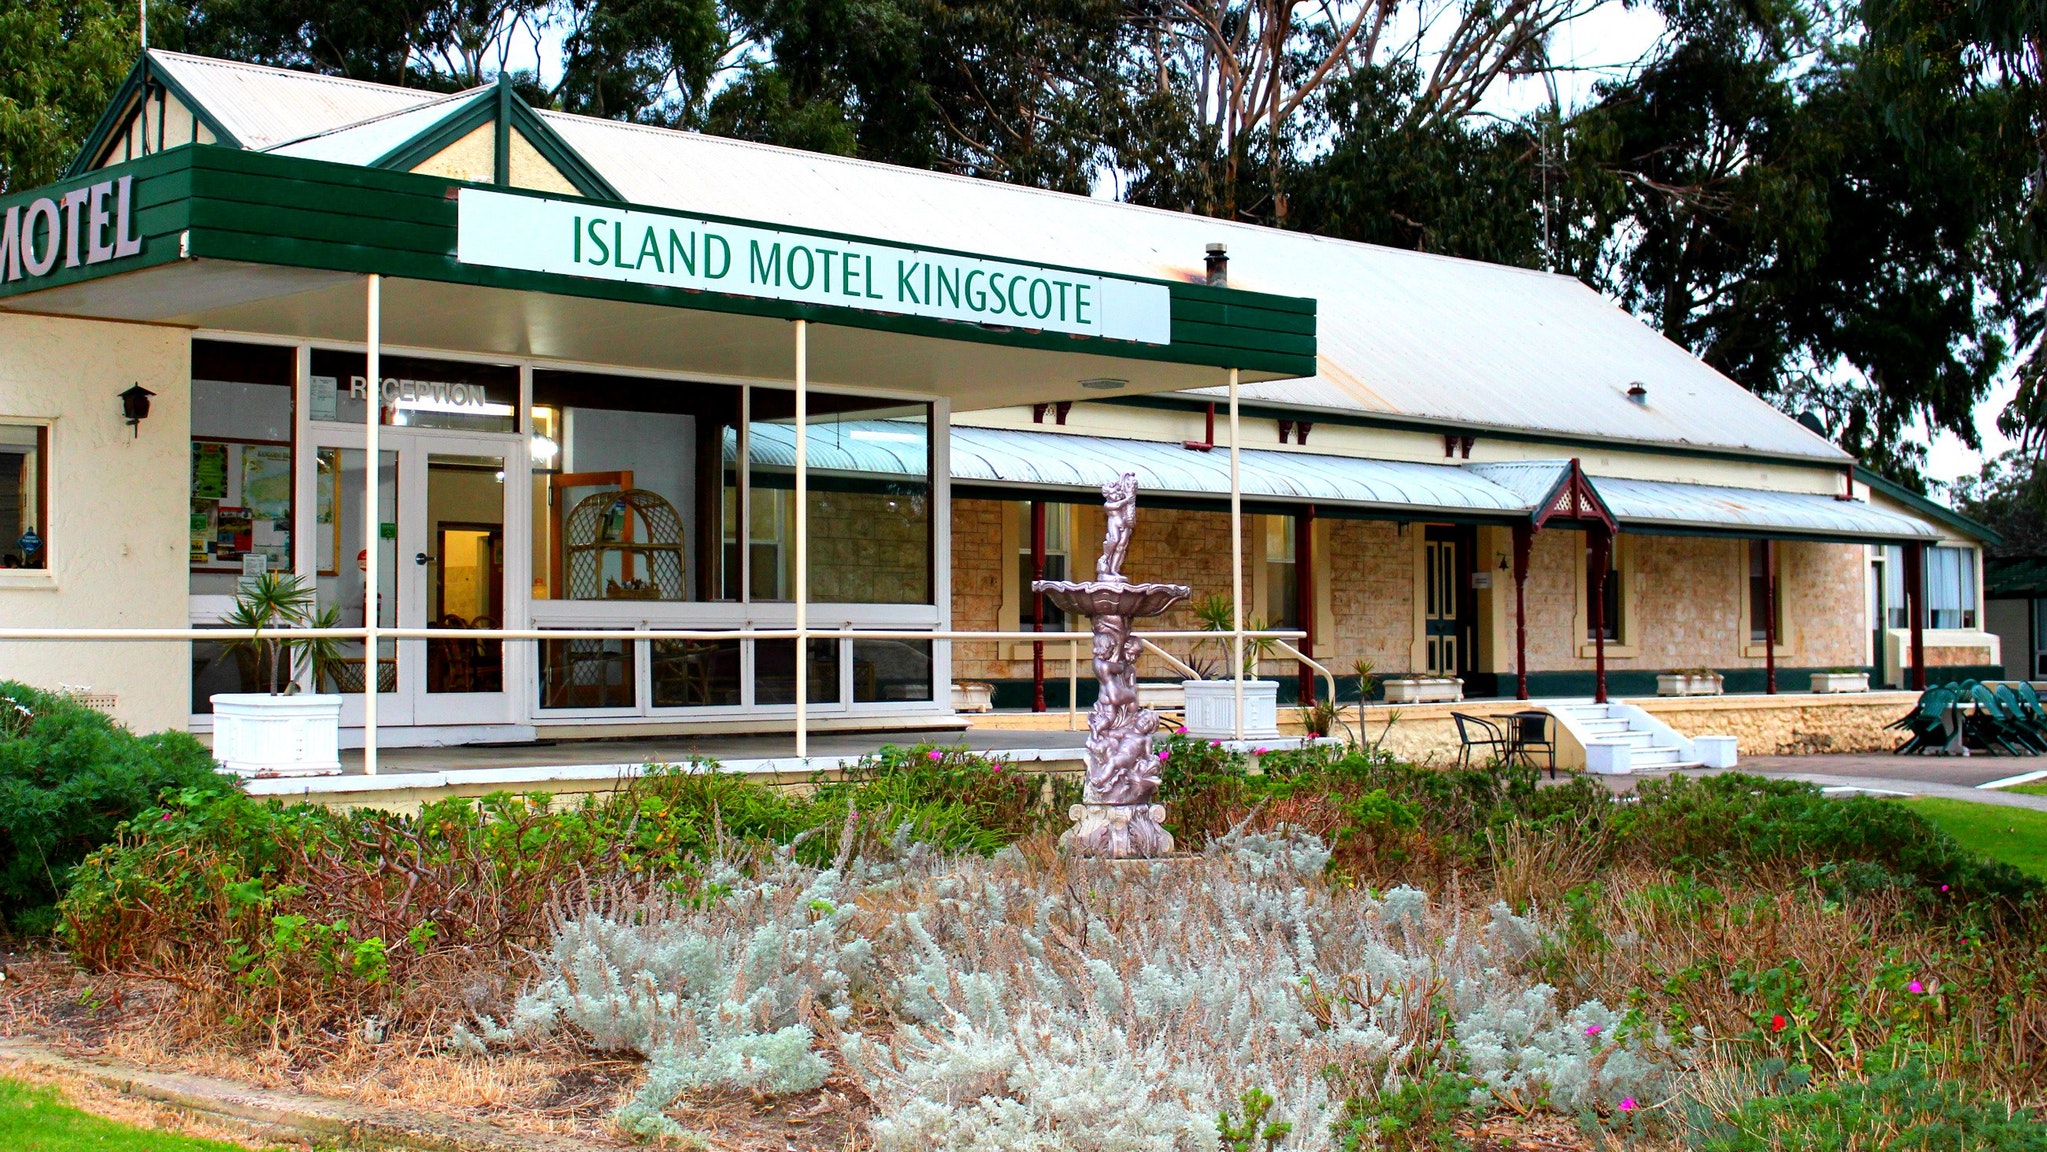 Island Motel Kingscote - Accommodation in Bendigo 5